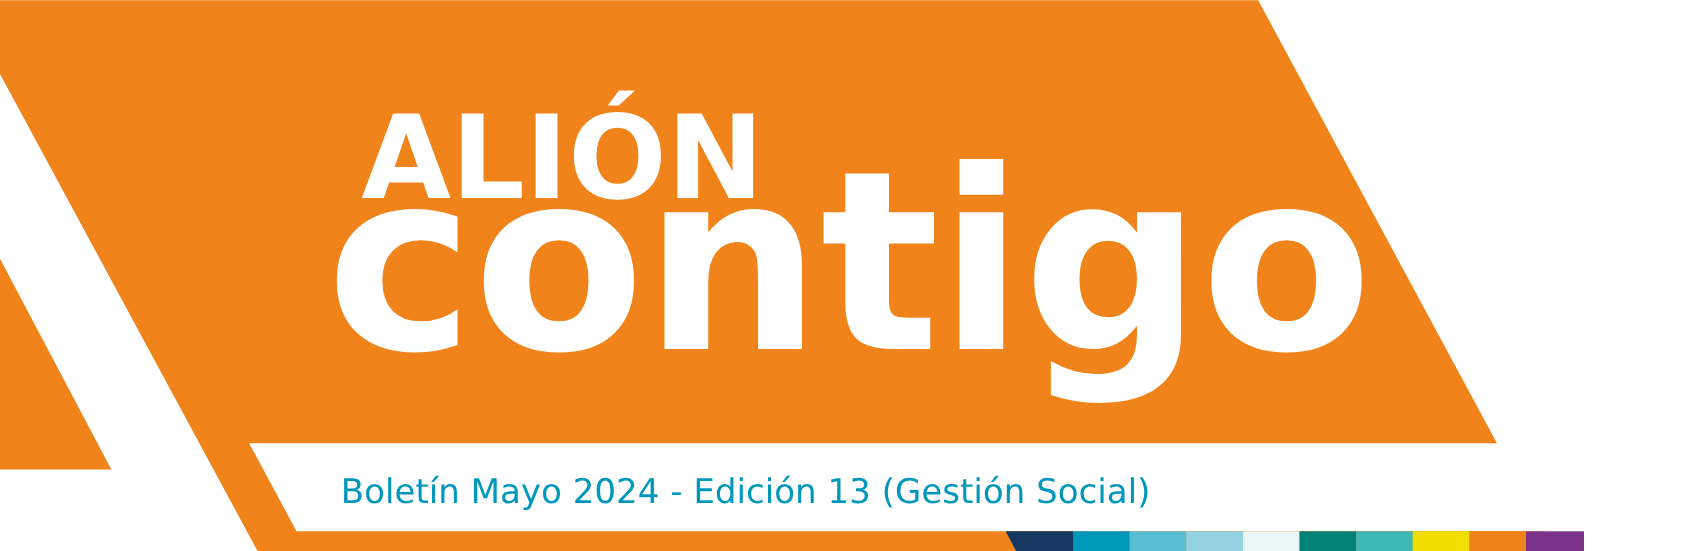 Boletin Mayo 2024 - Edicion 13 (Gestion social)